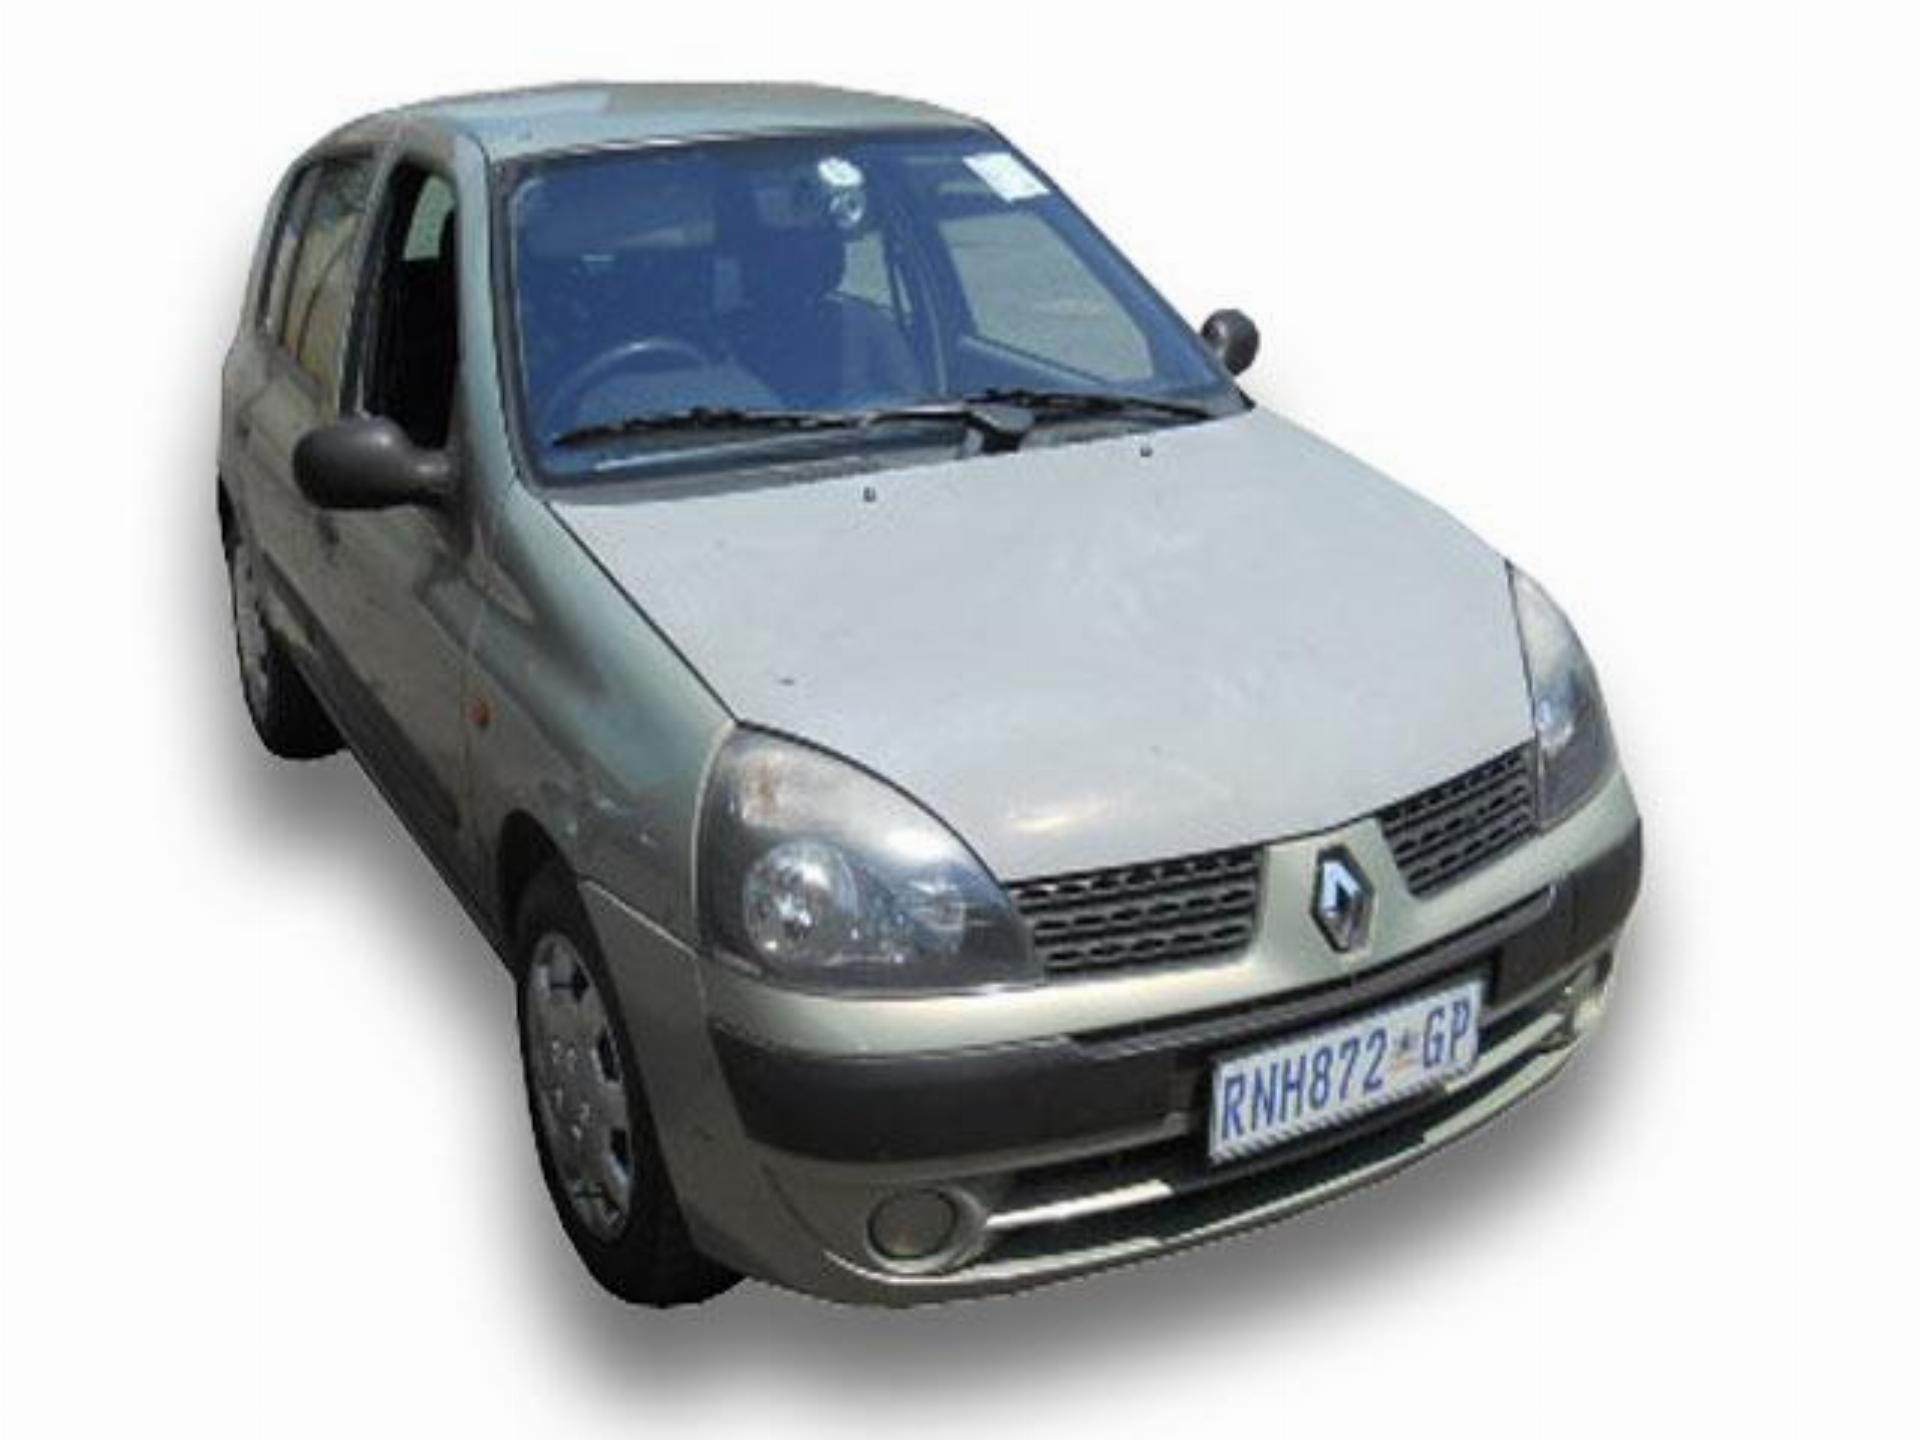 Renault Clio 1.4 Expression